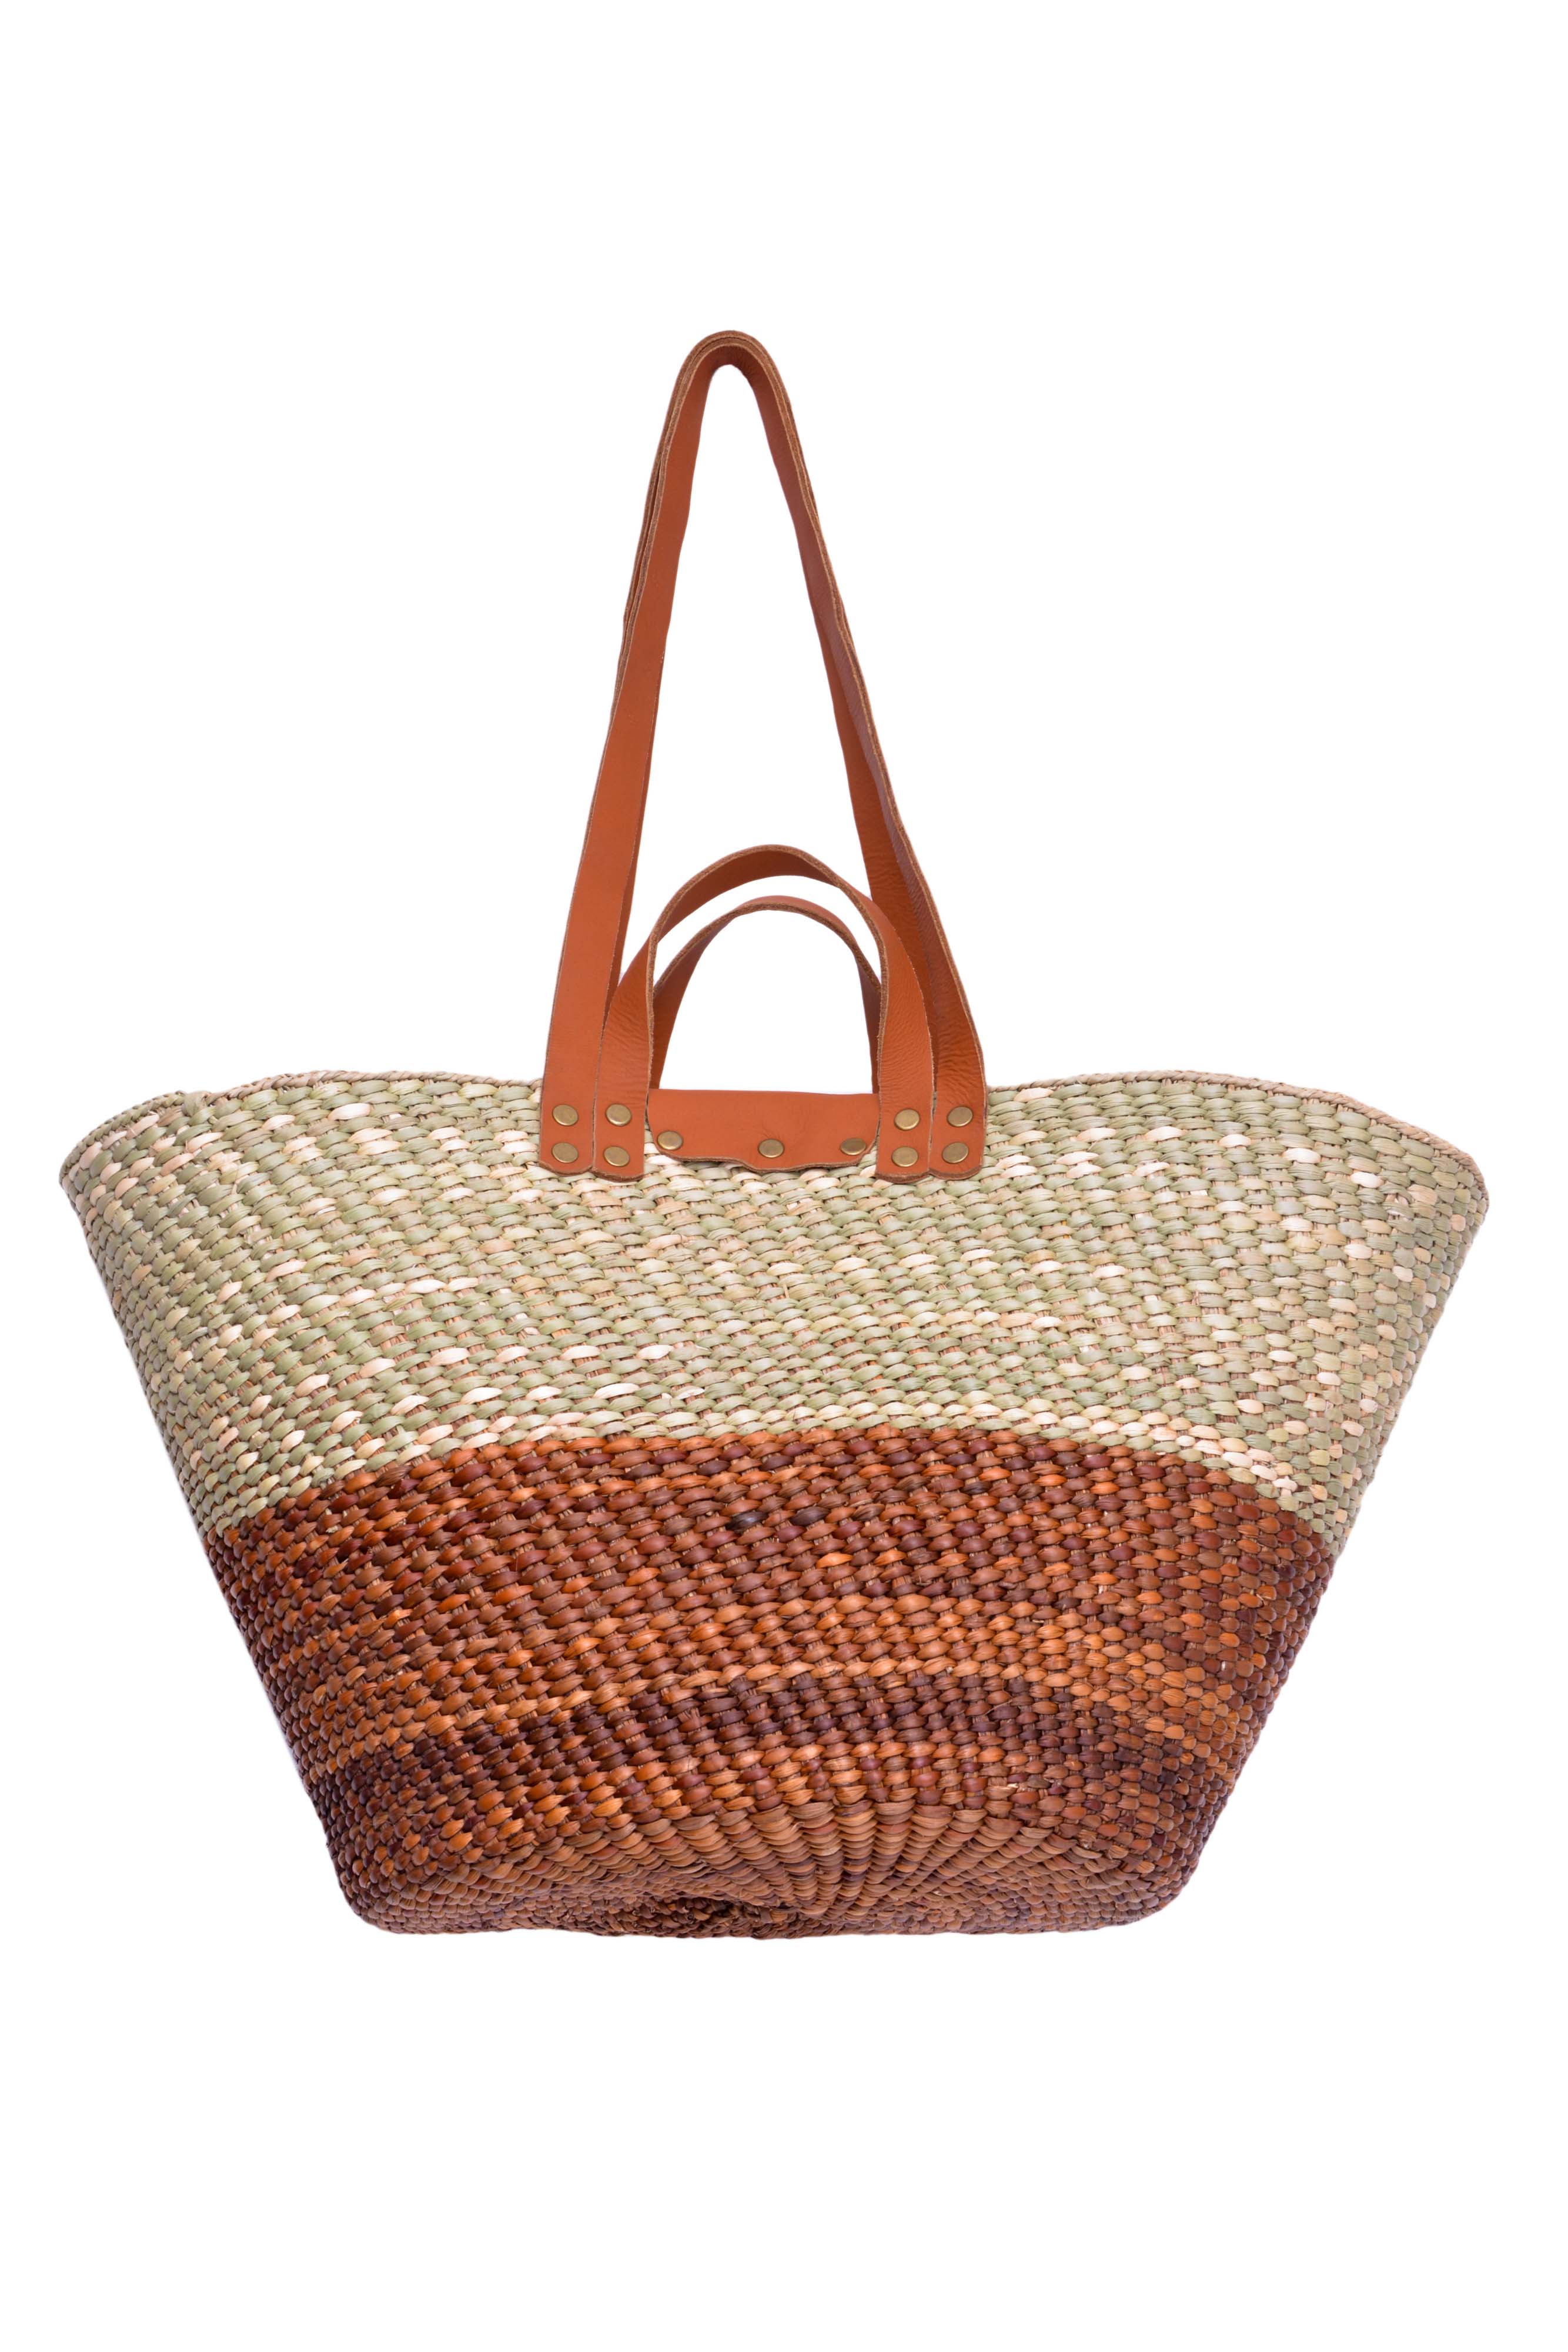 Ntukuru Everyday Use Handmade African Basket:Perfect for Vacations and Beach Travel